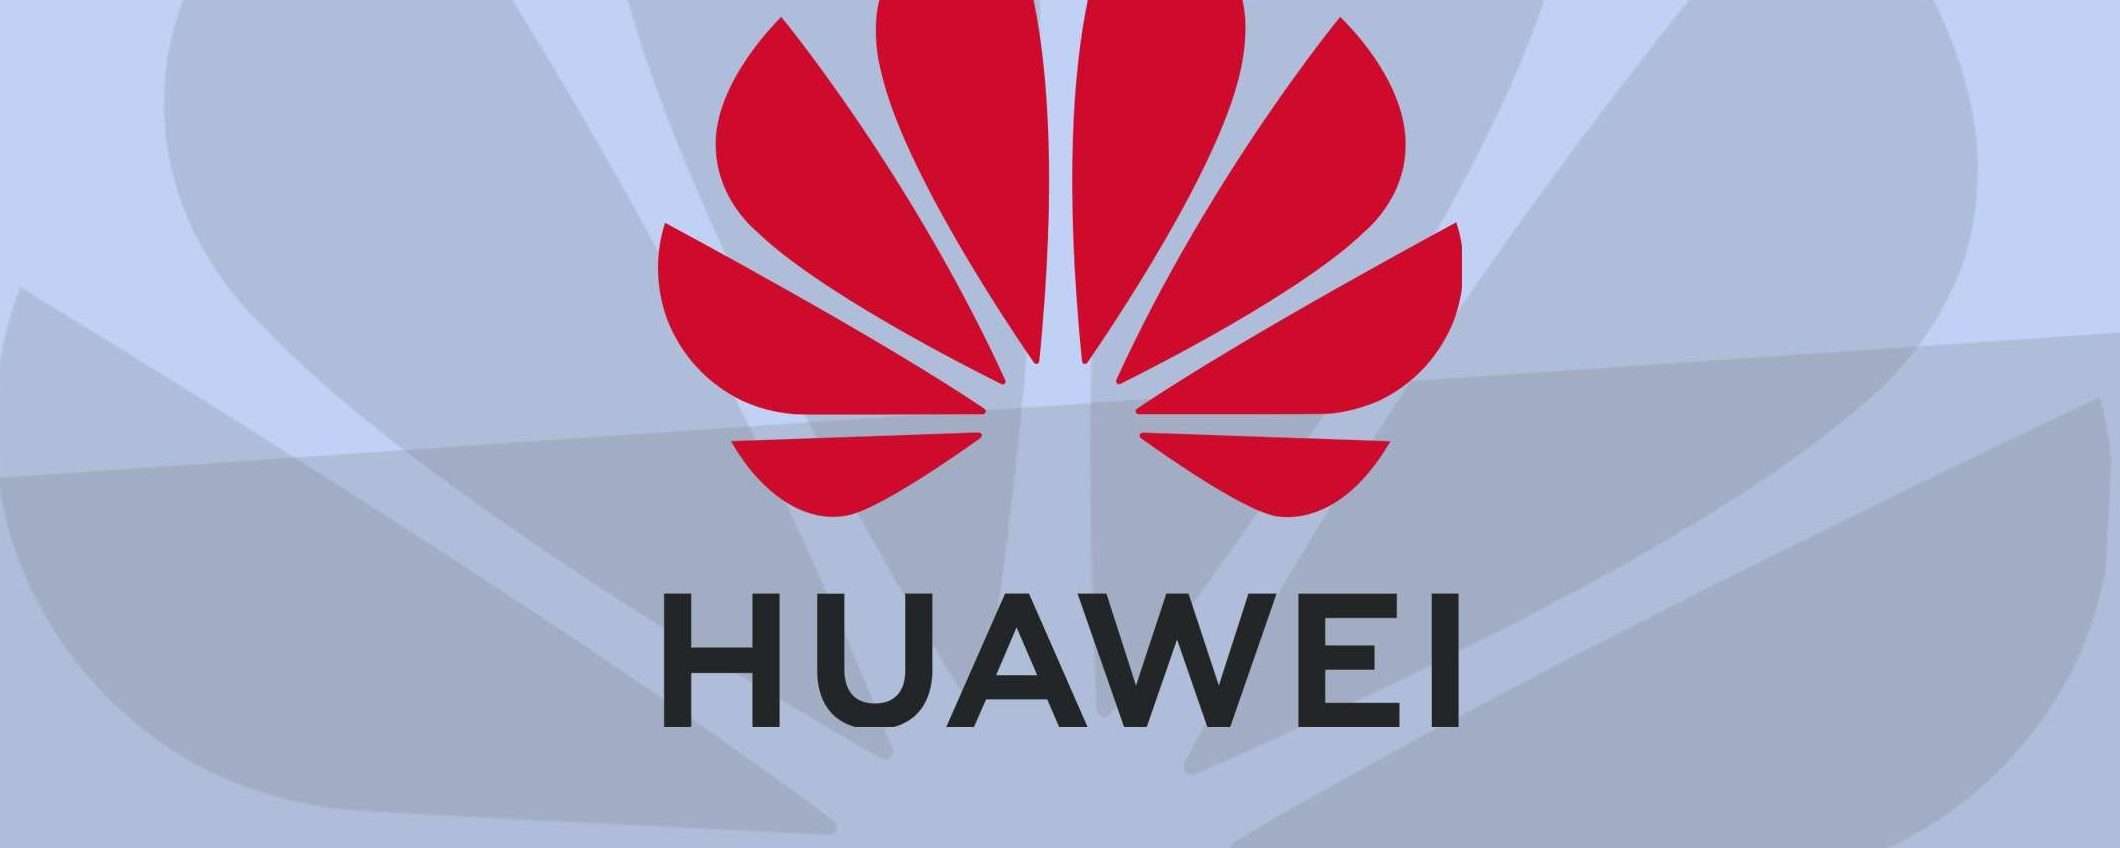 FCC chiede 5,6 miliardi per sostituire Huawei e ZTE